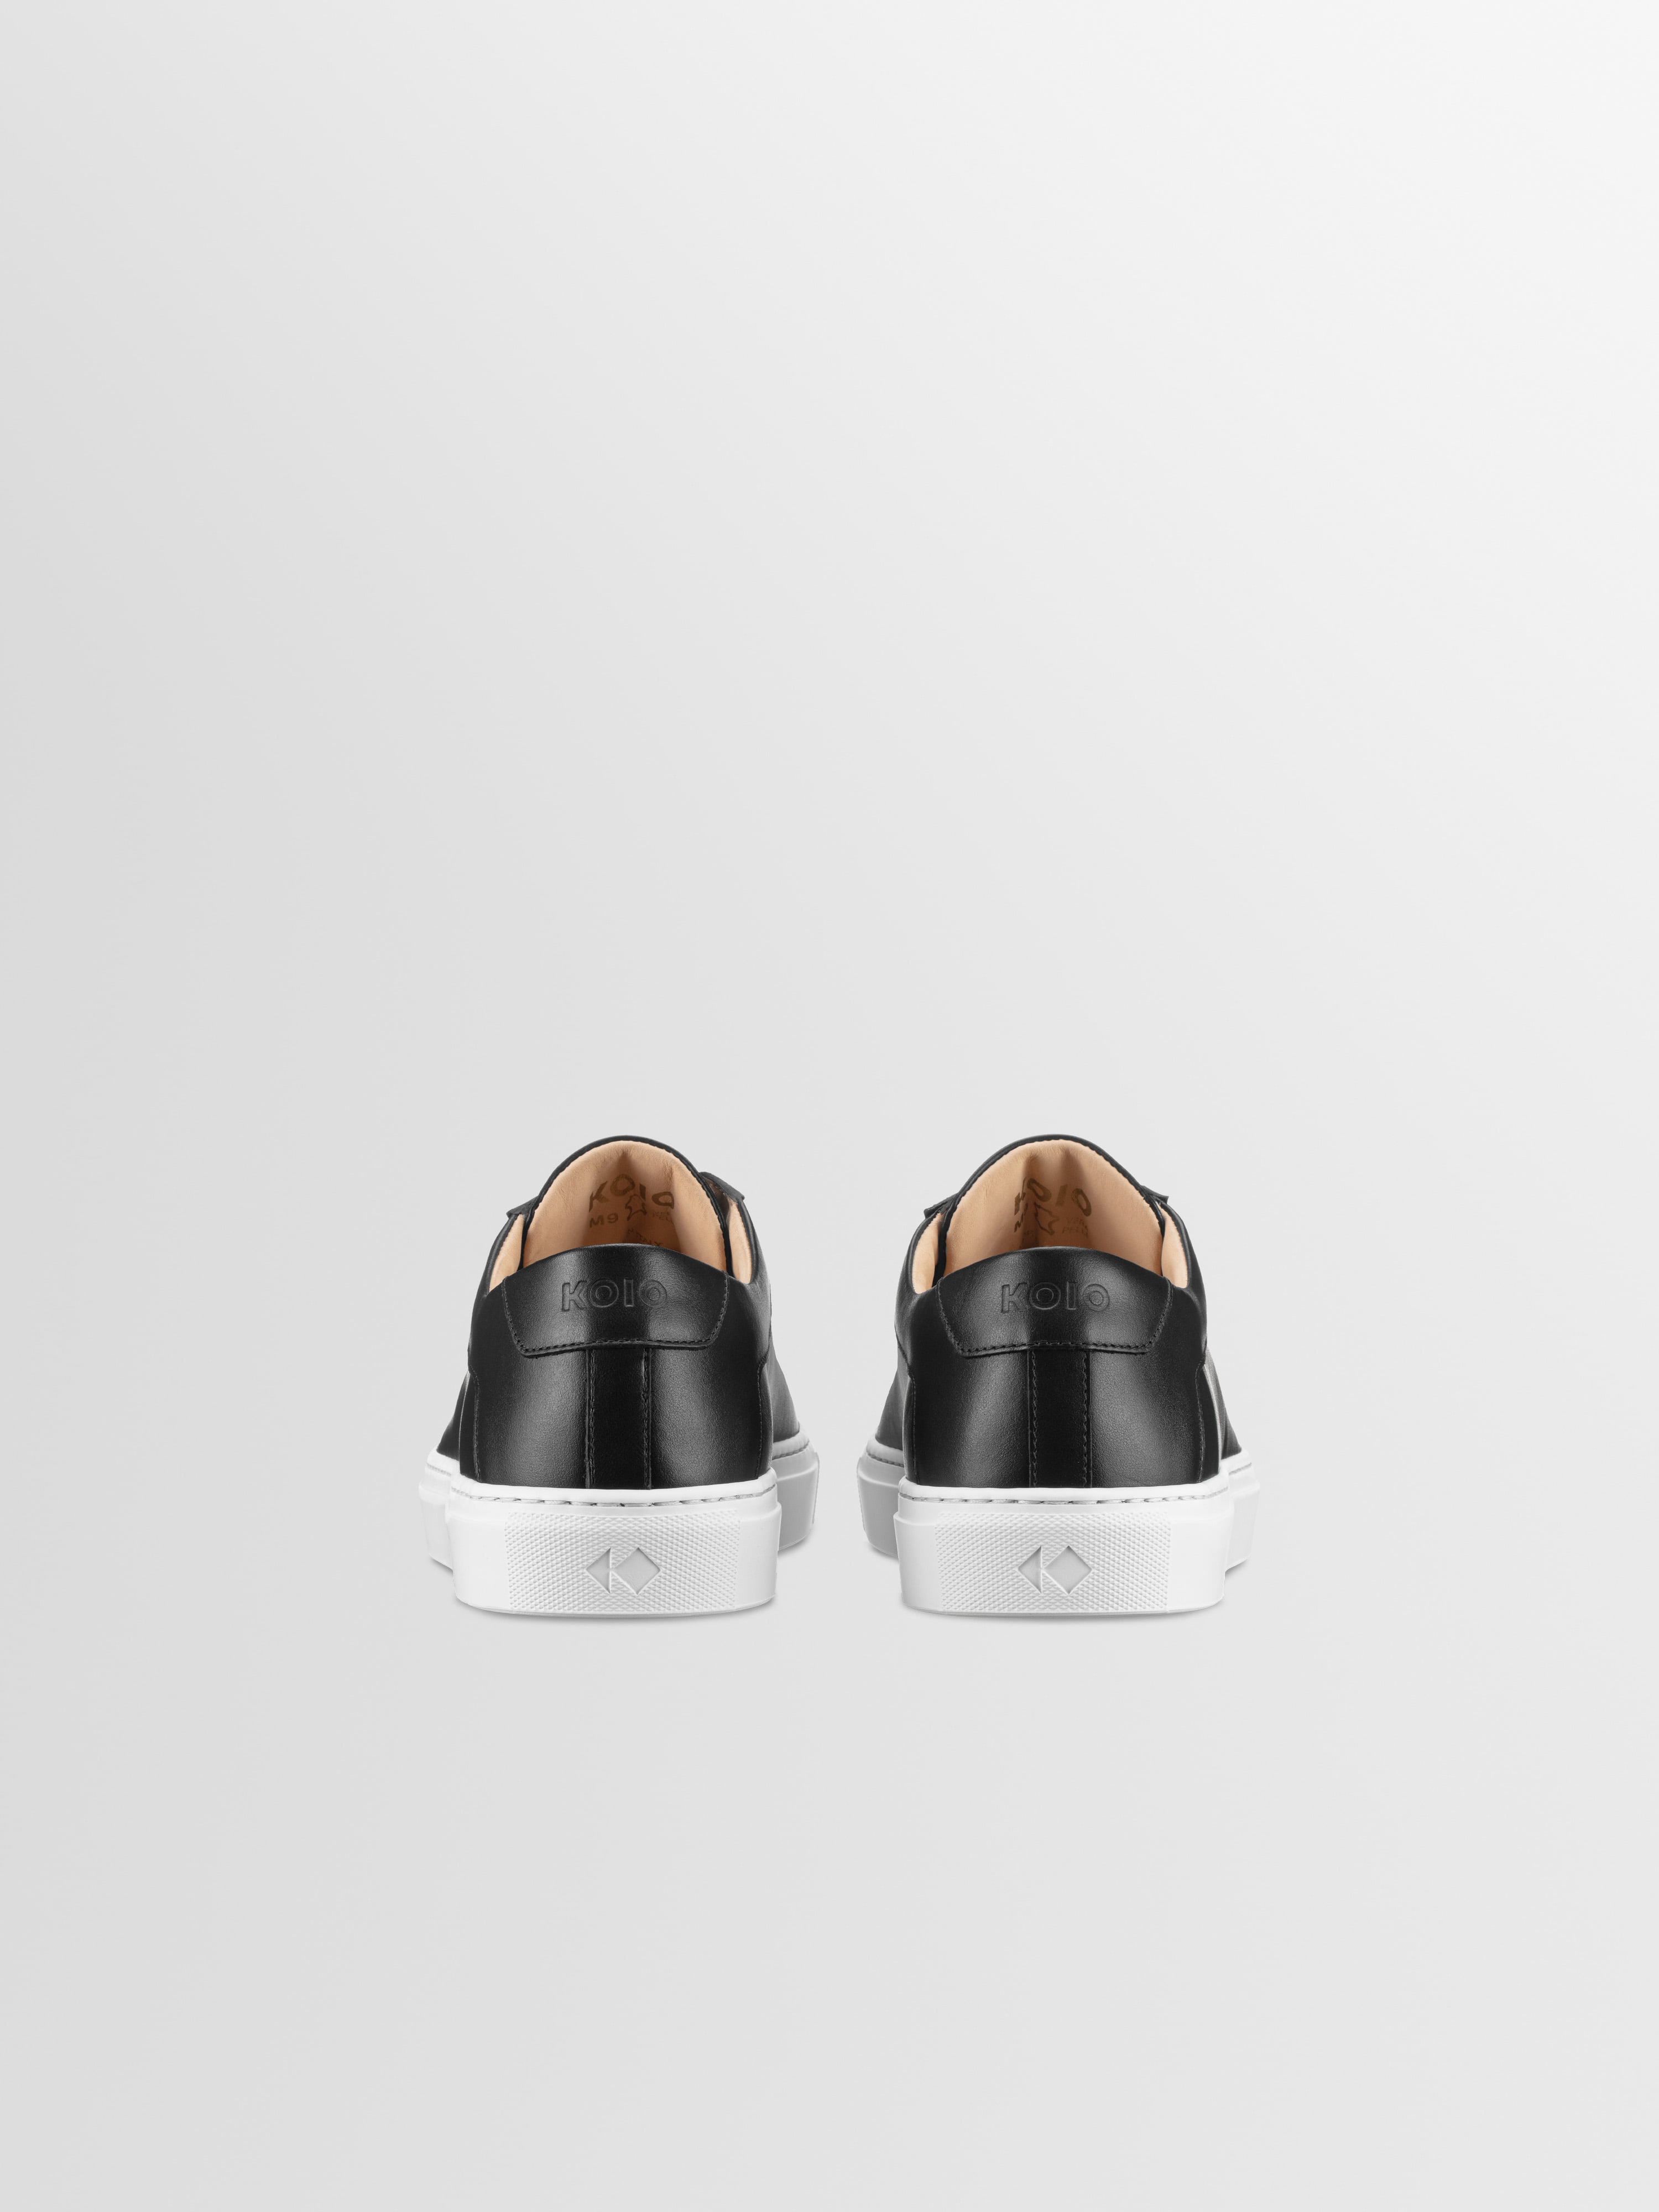 Men's Black Leather Low-top Sneaker, Capri in Onyx